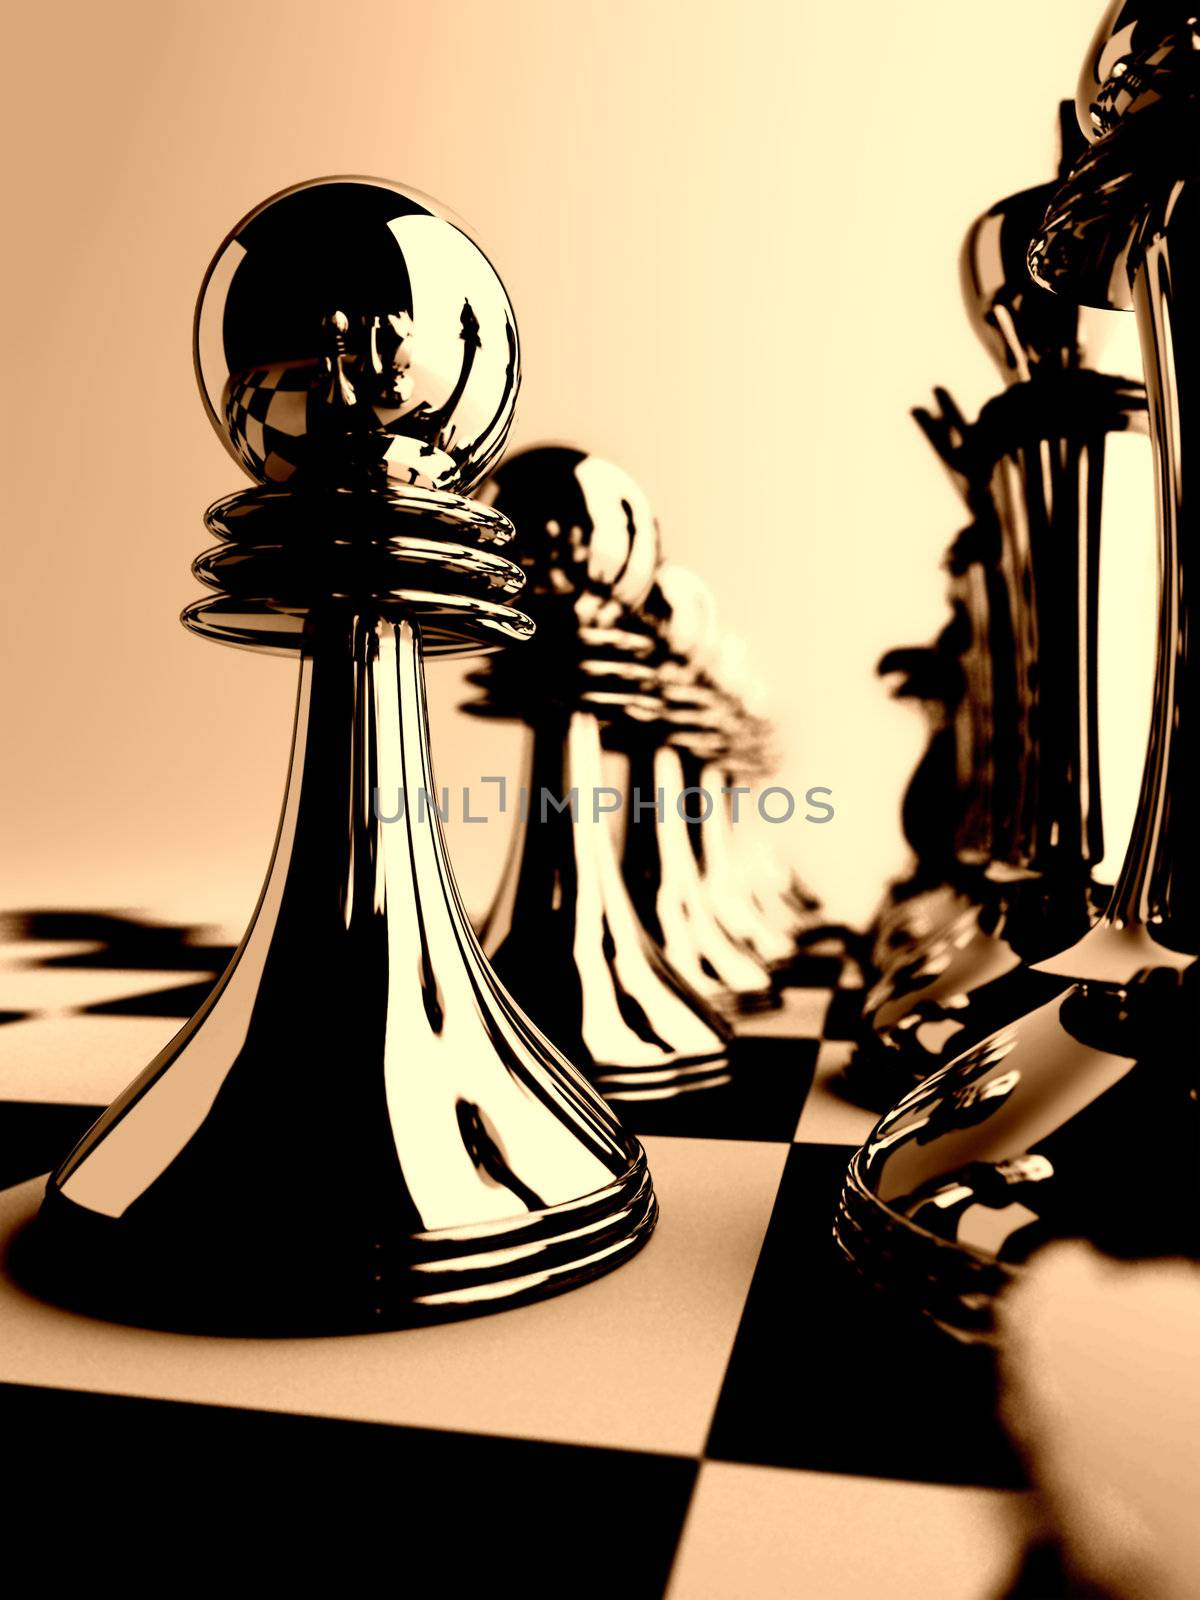 chessmen of dark color on checkered board